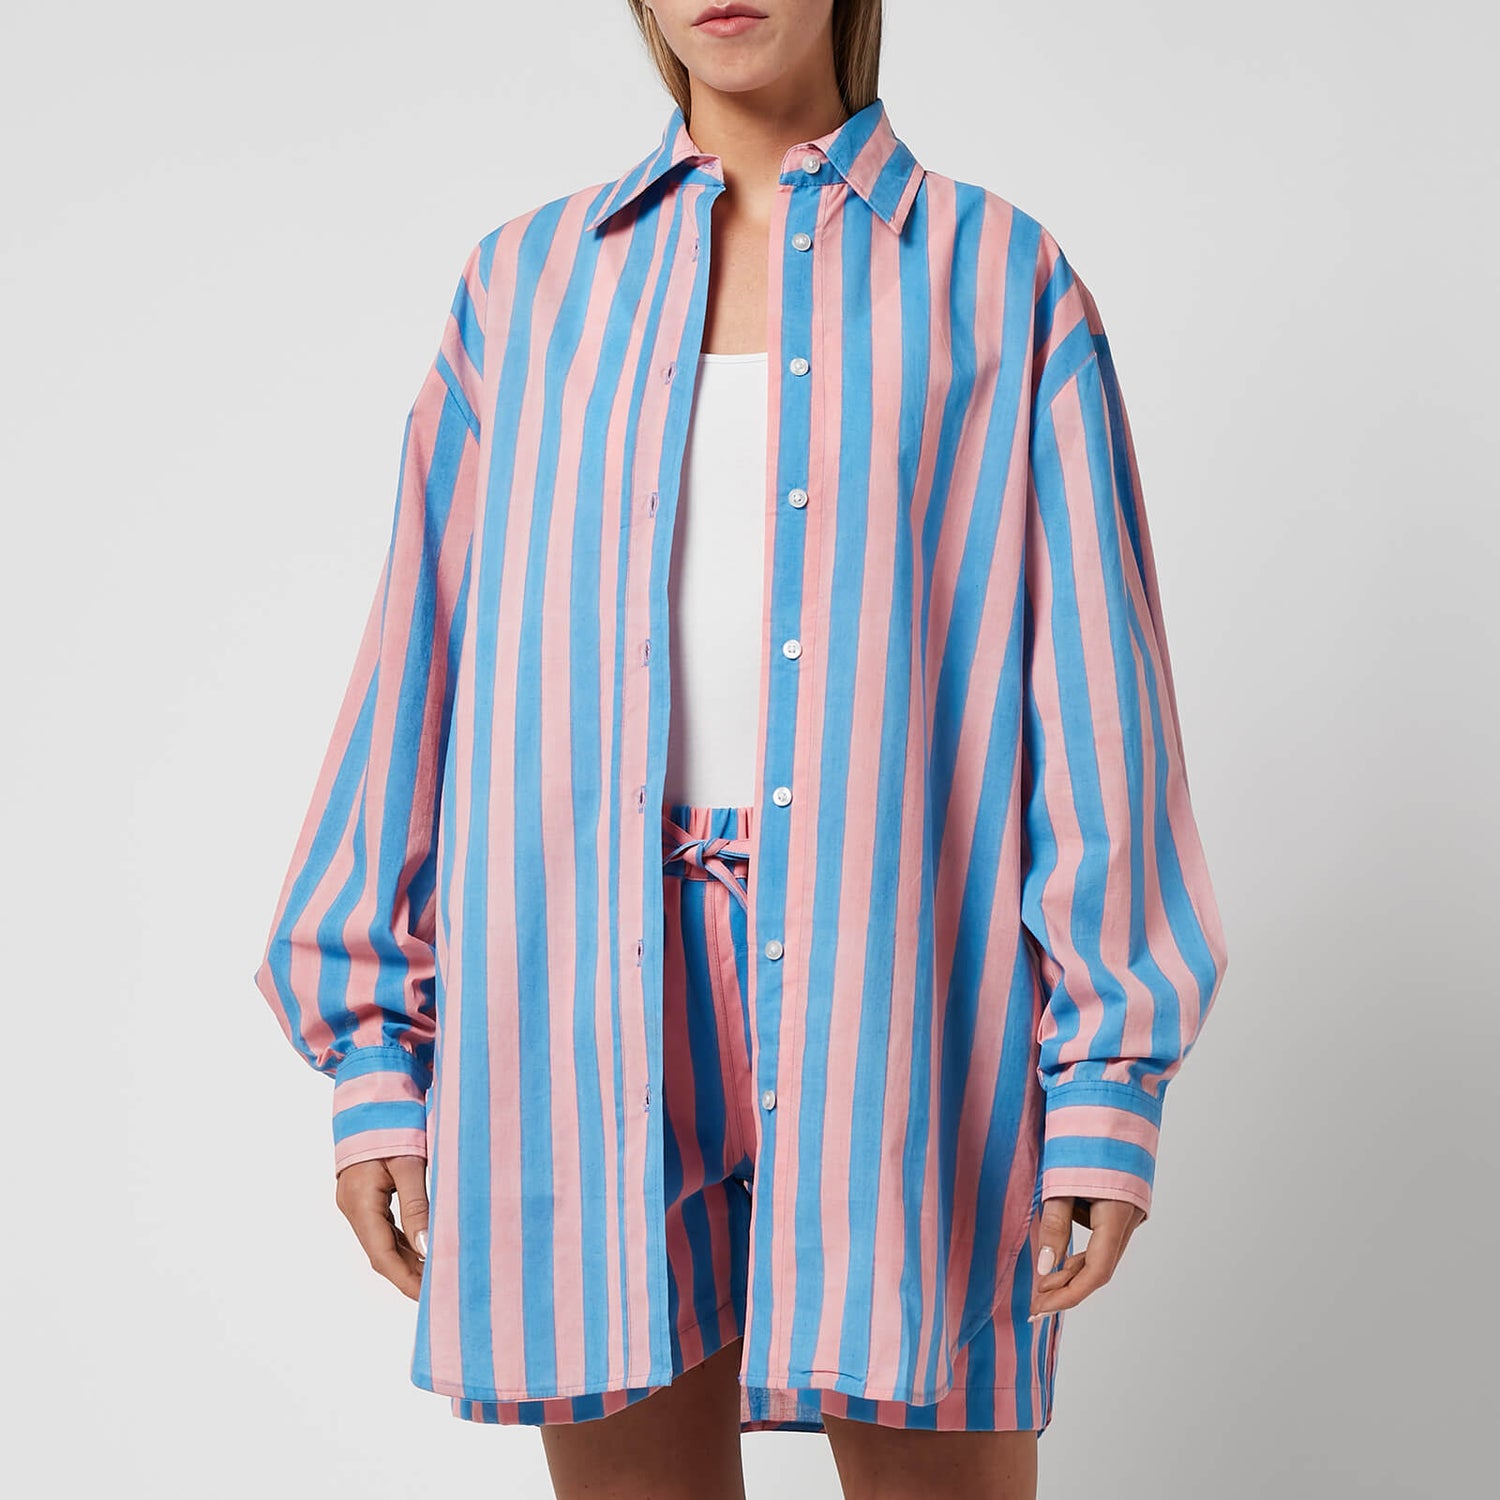 SZ Blockprints Women's Oversized Button Down Shirt - Faded Rose & London Blue - S